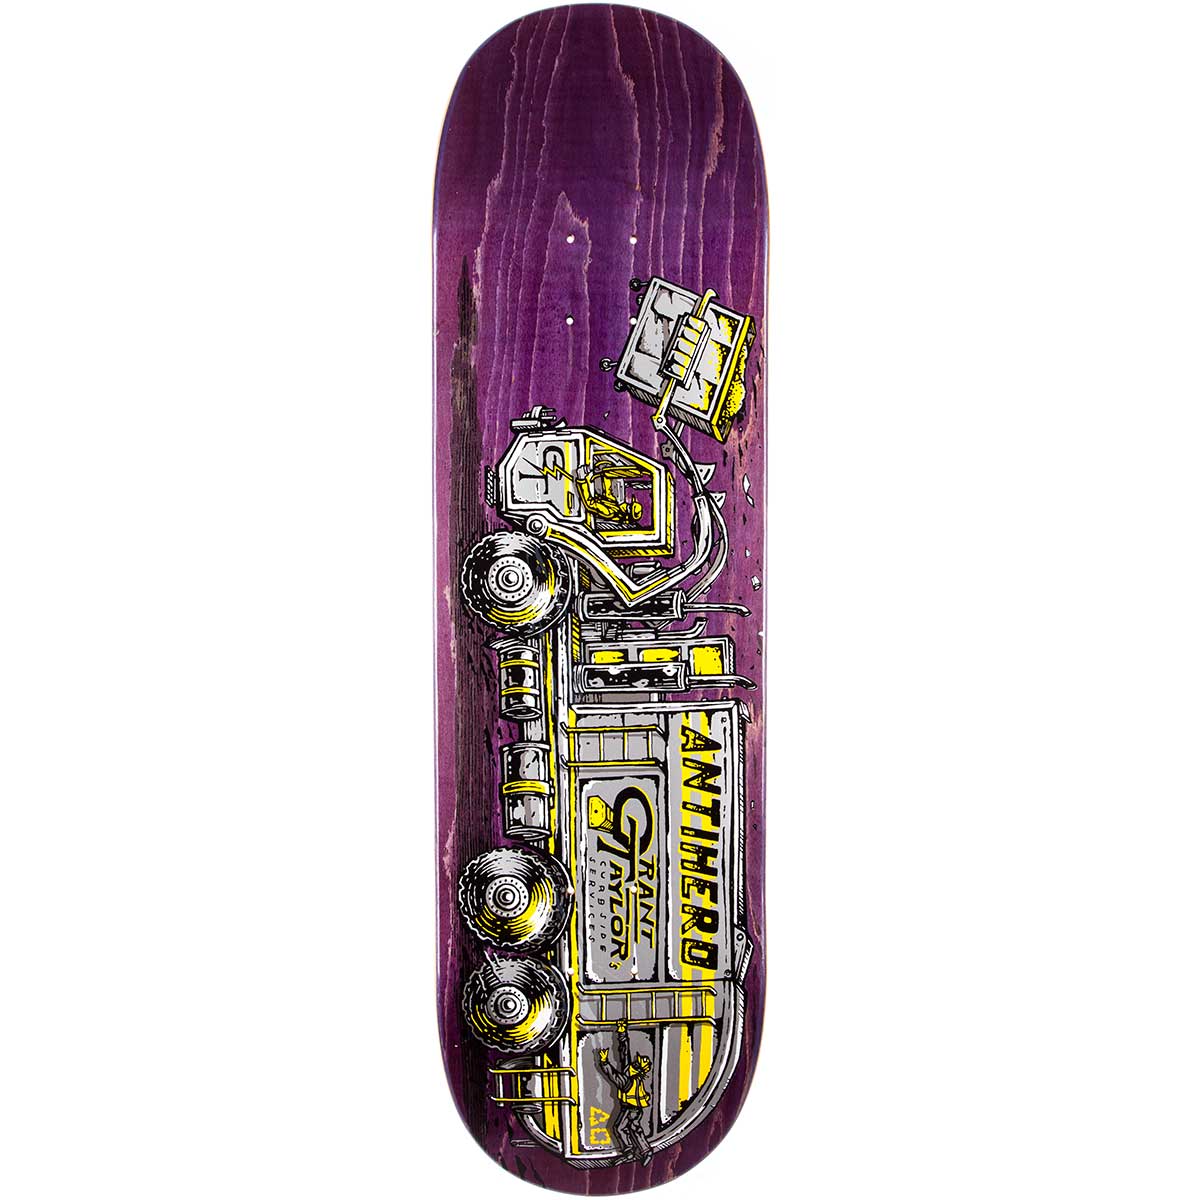 Grant Taylor Curbside Antihero Skateboard Deck